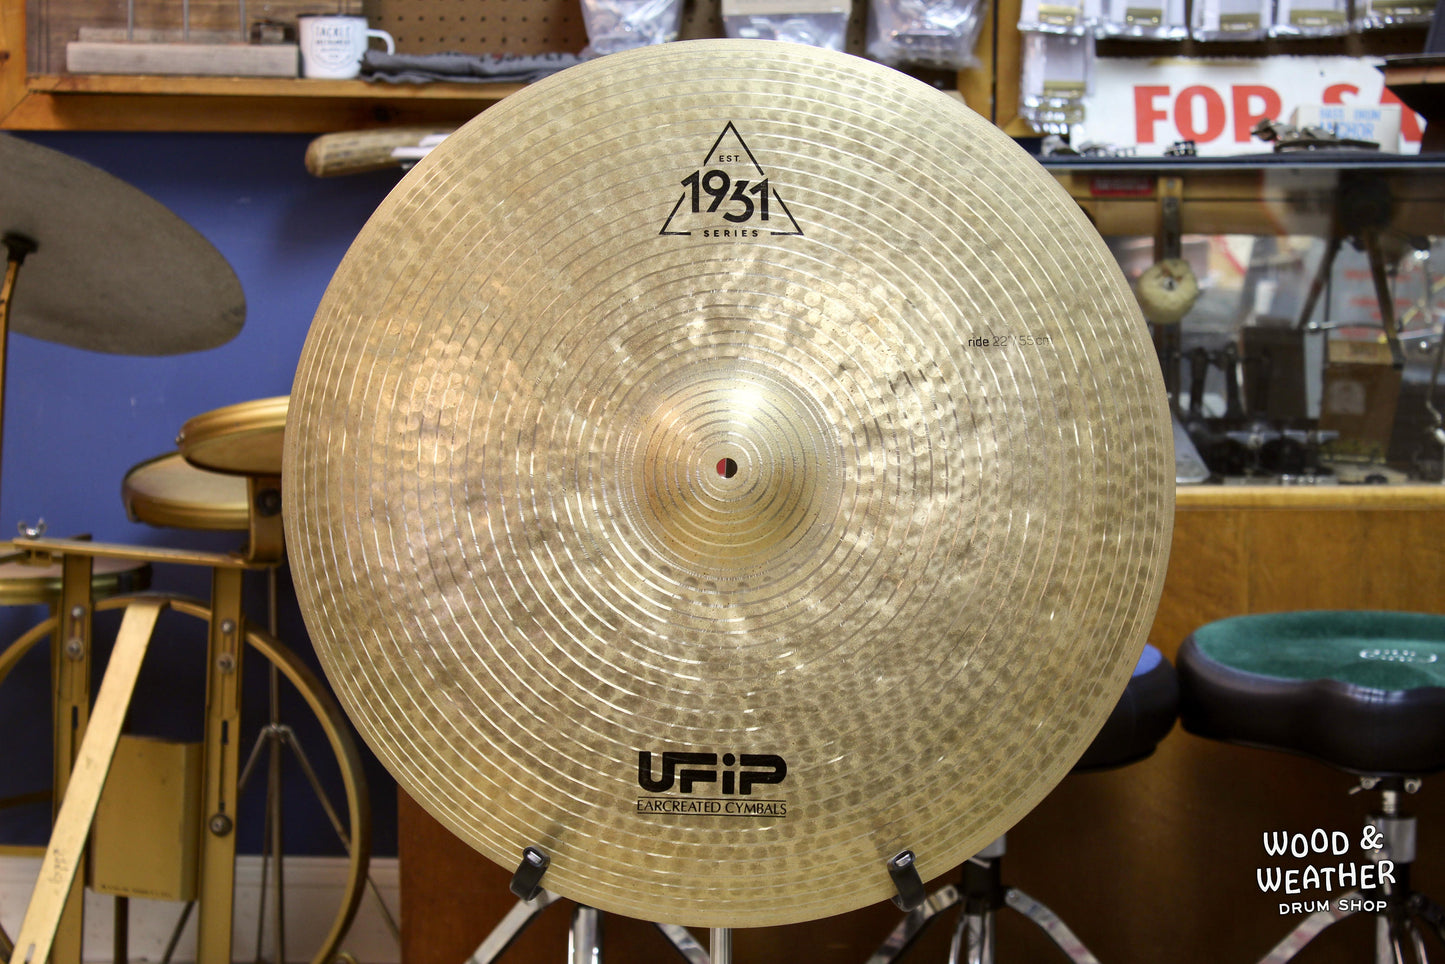 UFIP 22" Est. 1931 Series Ride Cymbal 2380g